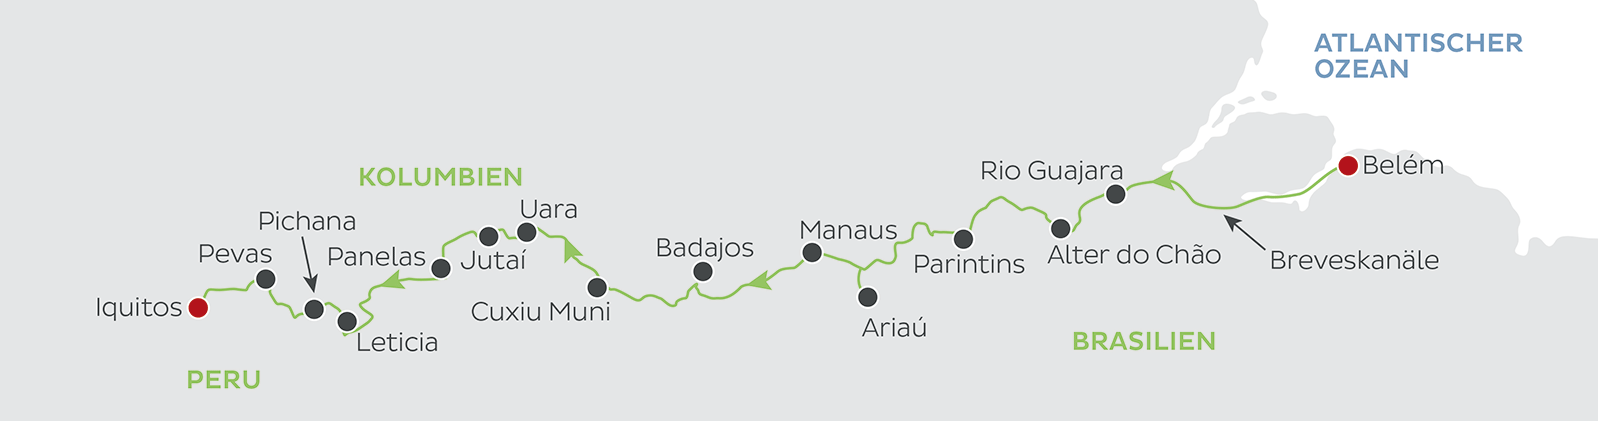 BMI-WVO-17-Tage-Belém-Breves-Rio-Guajara-Parintins-Ariau-Manaus--Cuxiu-Muni-Panelas-Leticia-Pichana-Pebas-Iquitos